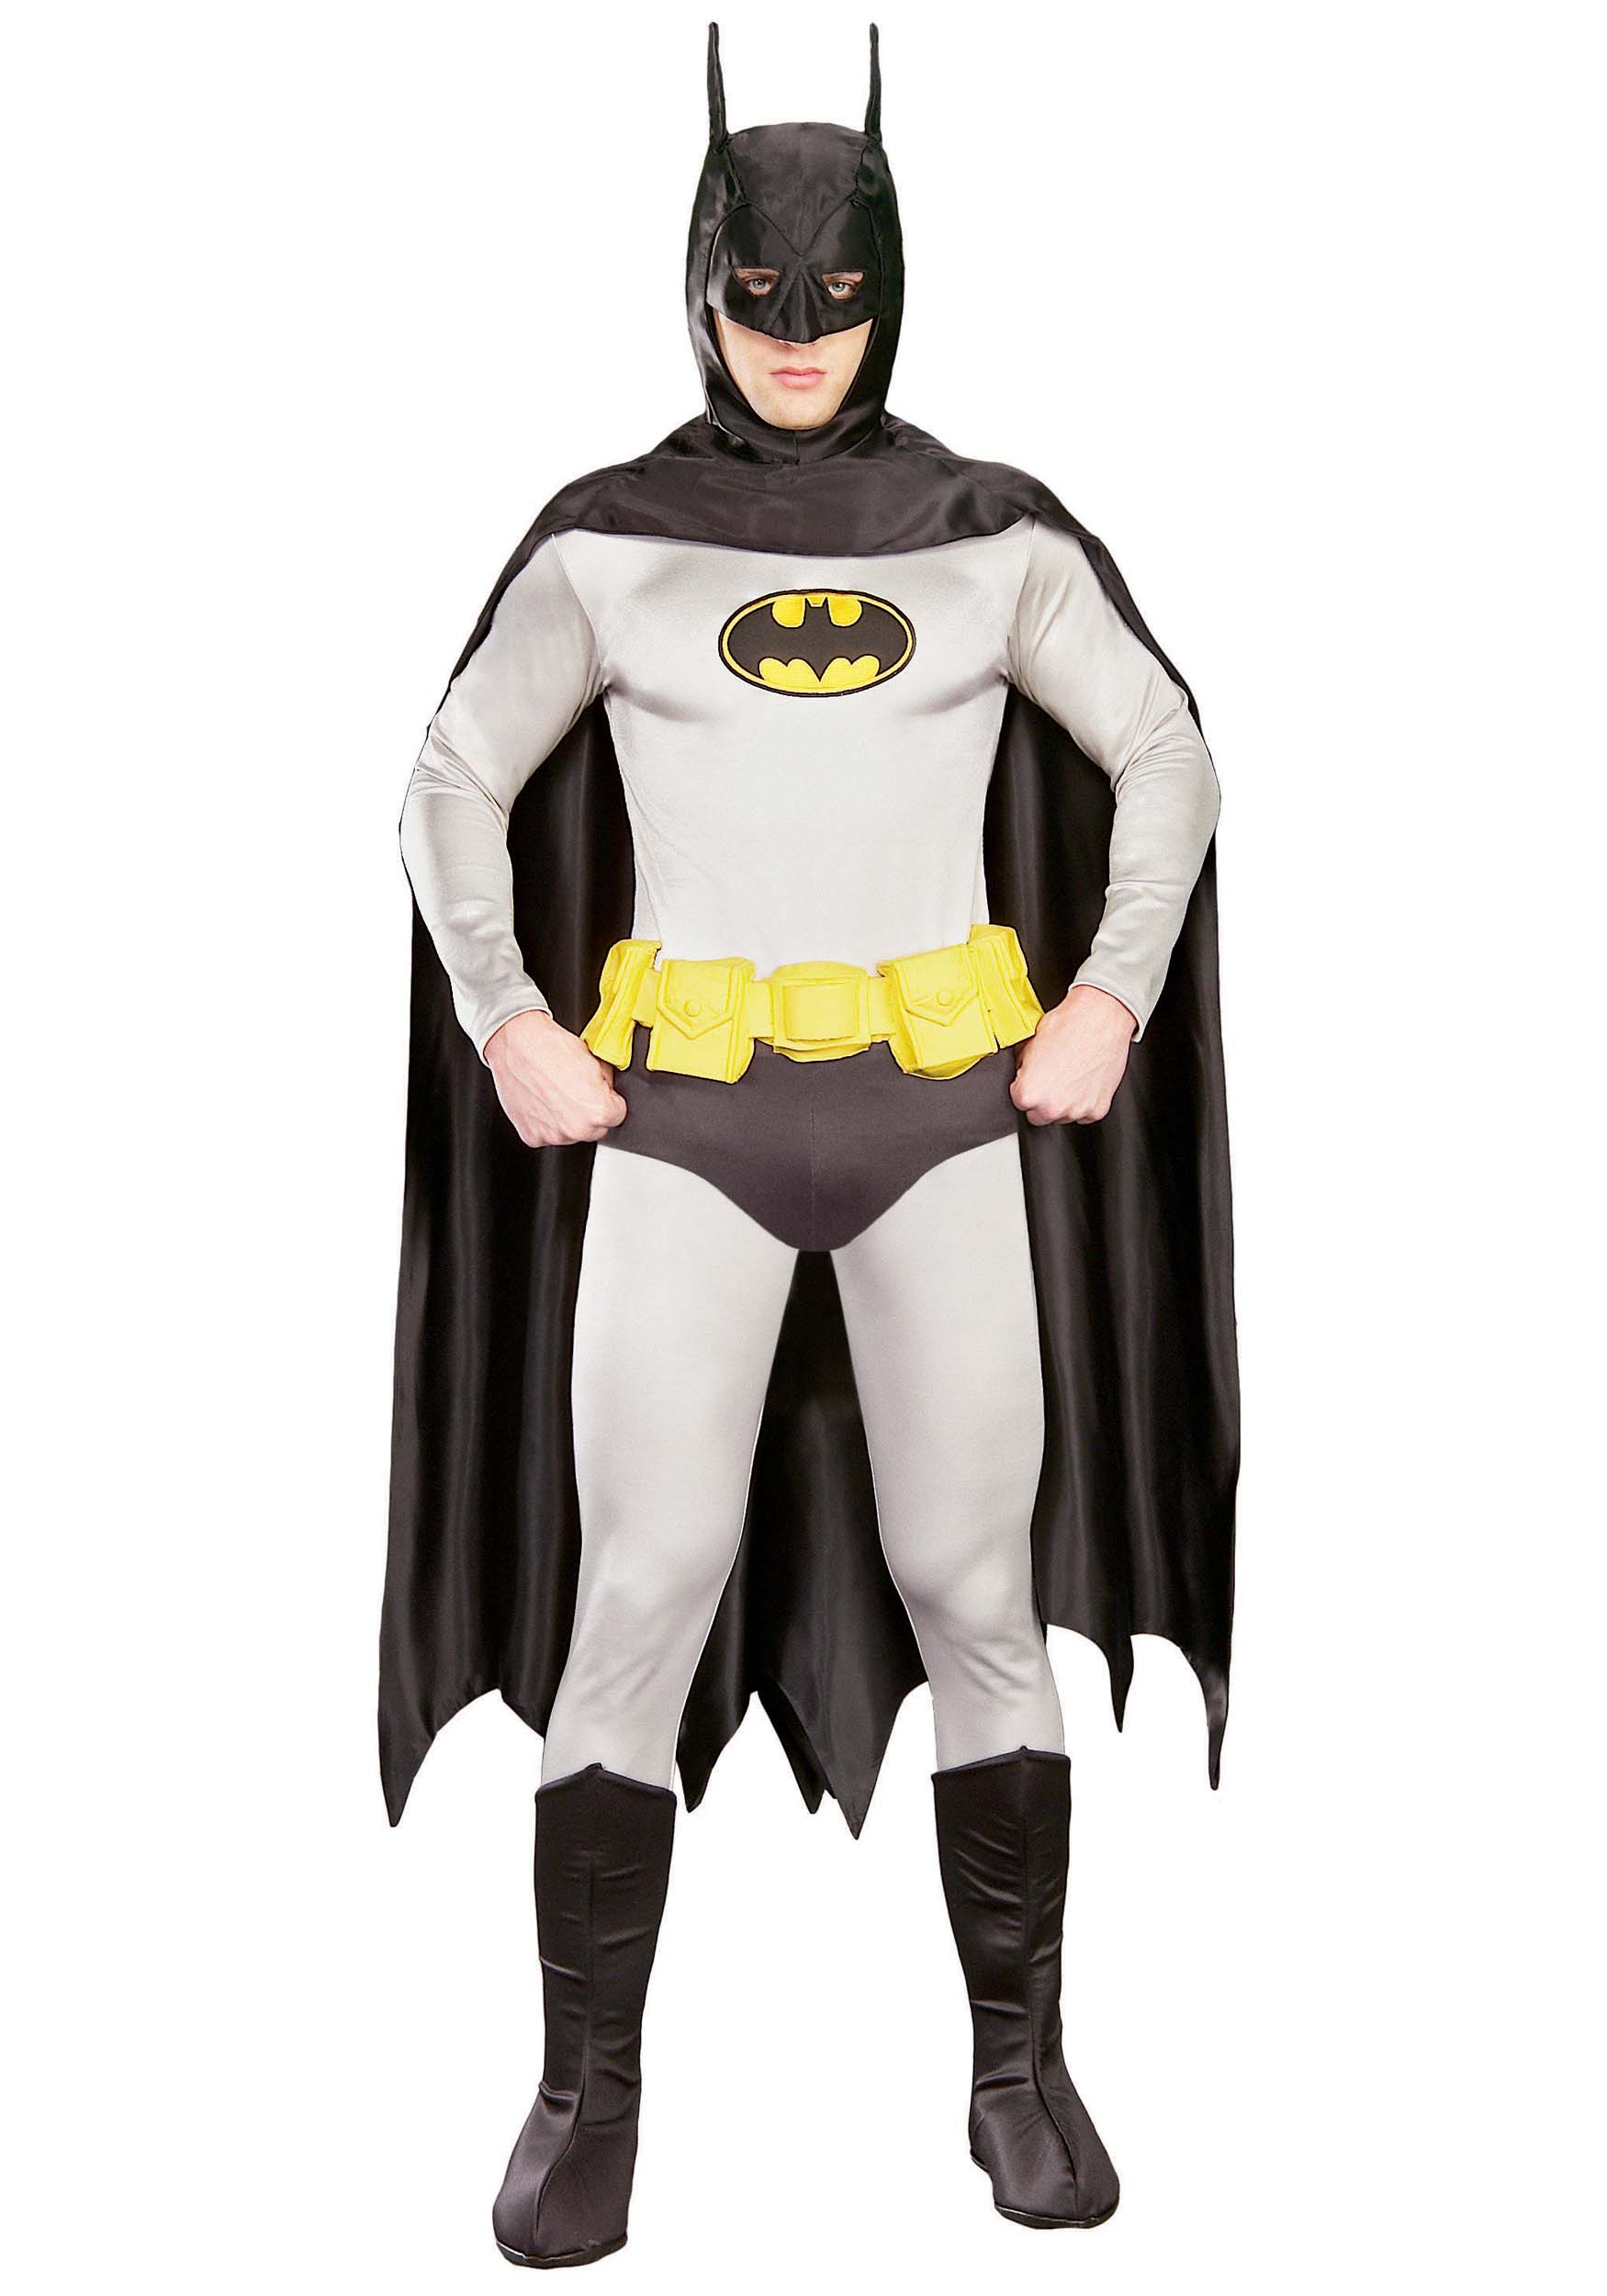 Batman Cosplay Costume Classic Bodysuit [15090342] - $45.99 - Superhero ...